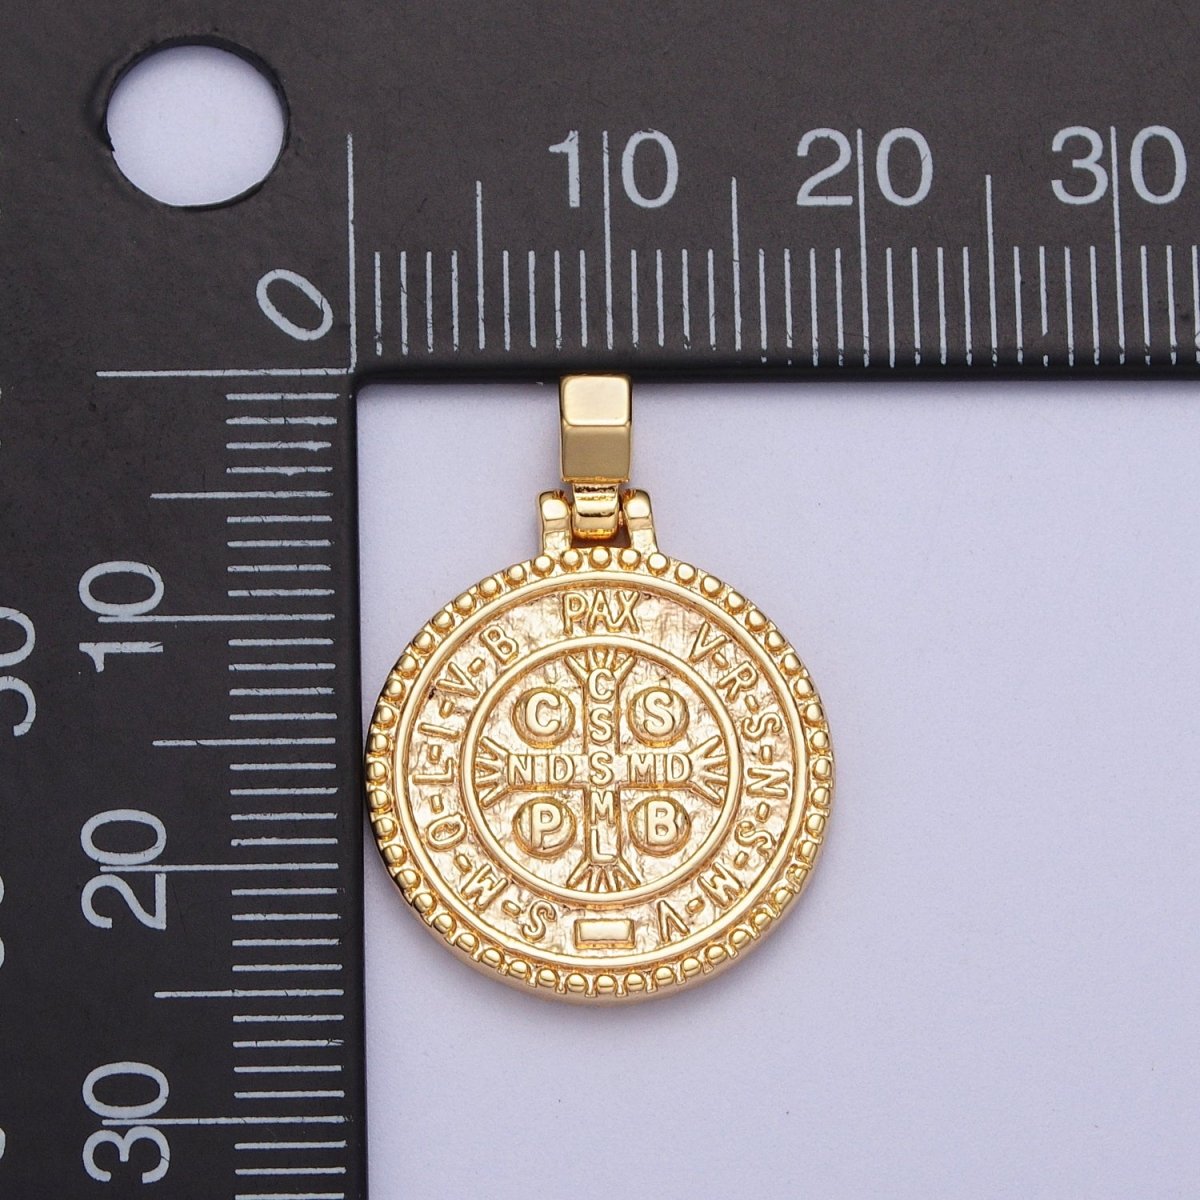 24K Gold Filled Saint St. Benedict SMQLIVB PAX VRSNSMV, Cross Moline CSSML NDSMD Religious Coin Pendant | C-598 - DLUXCA